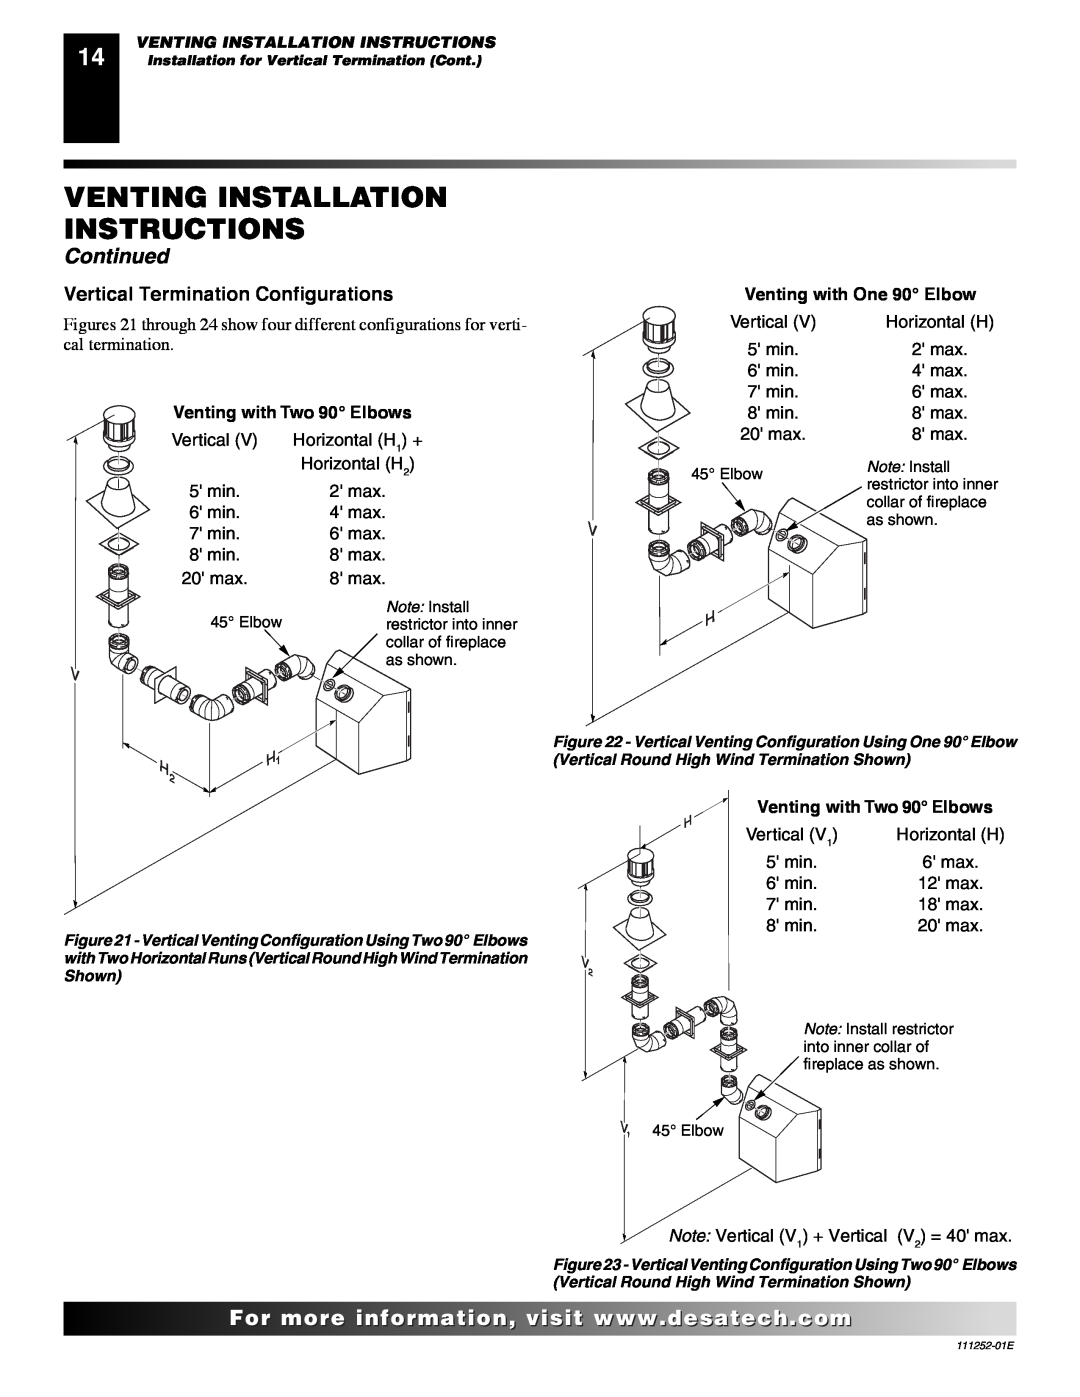 Desa (V)V36N-B SERIES, VV36NC1 SERIES Vertical Termination Configurations, Venting Installation Instructions, Continued 